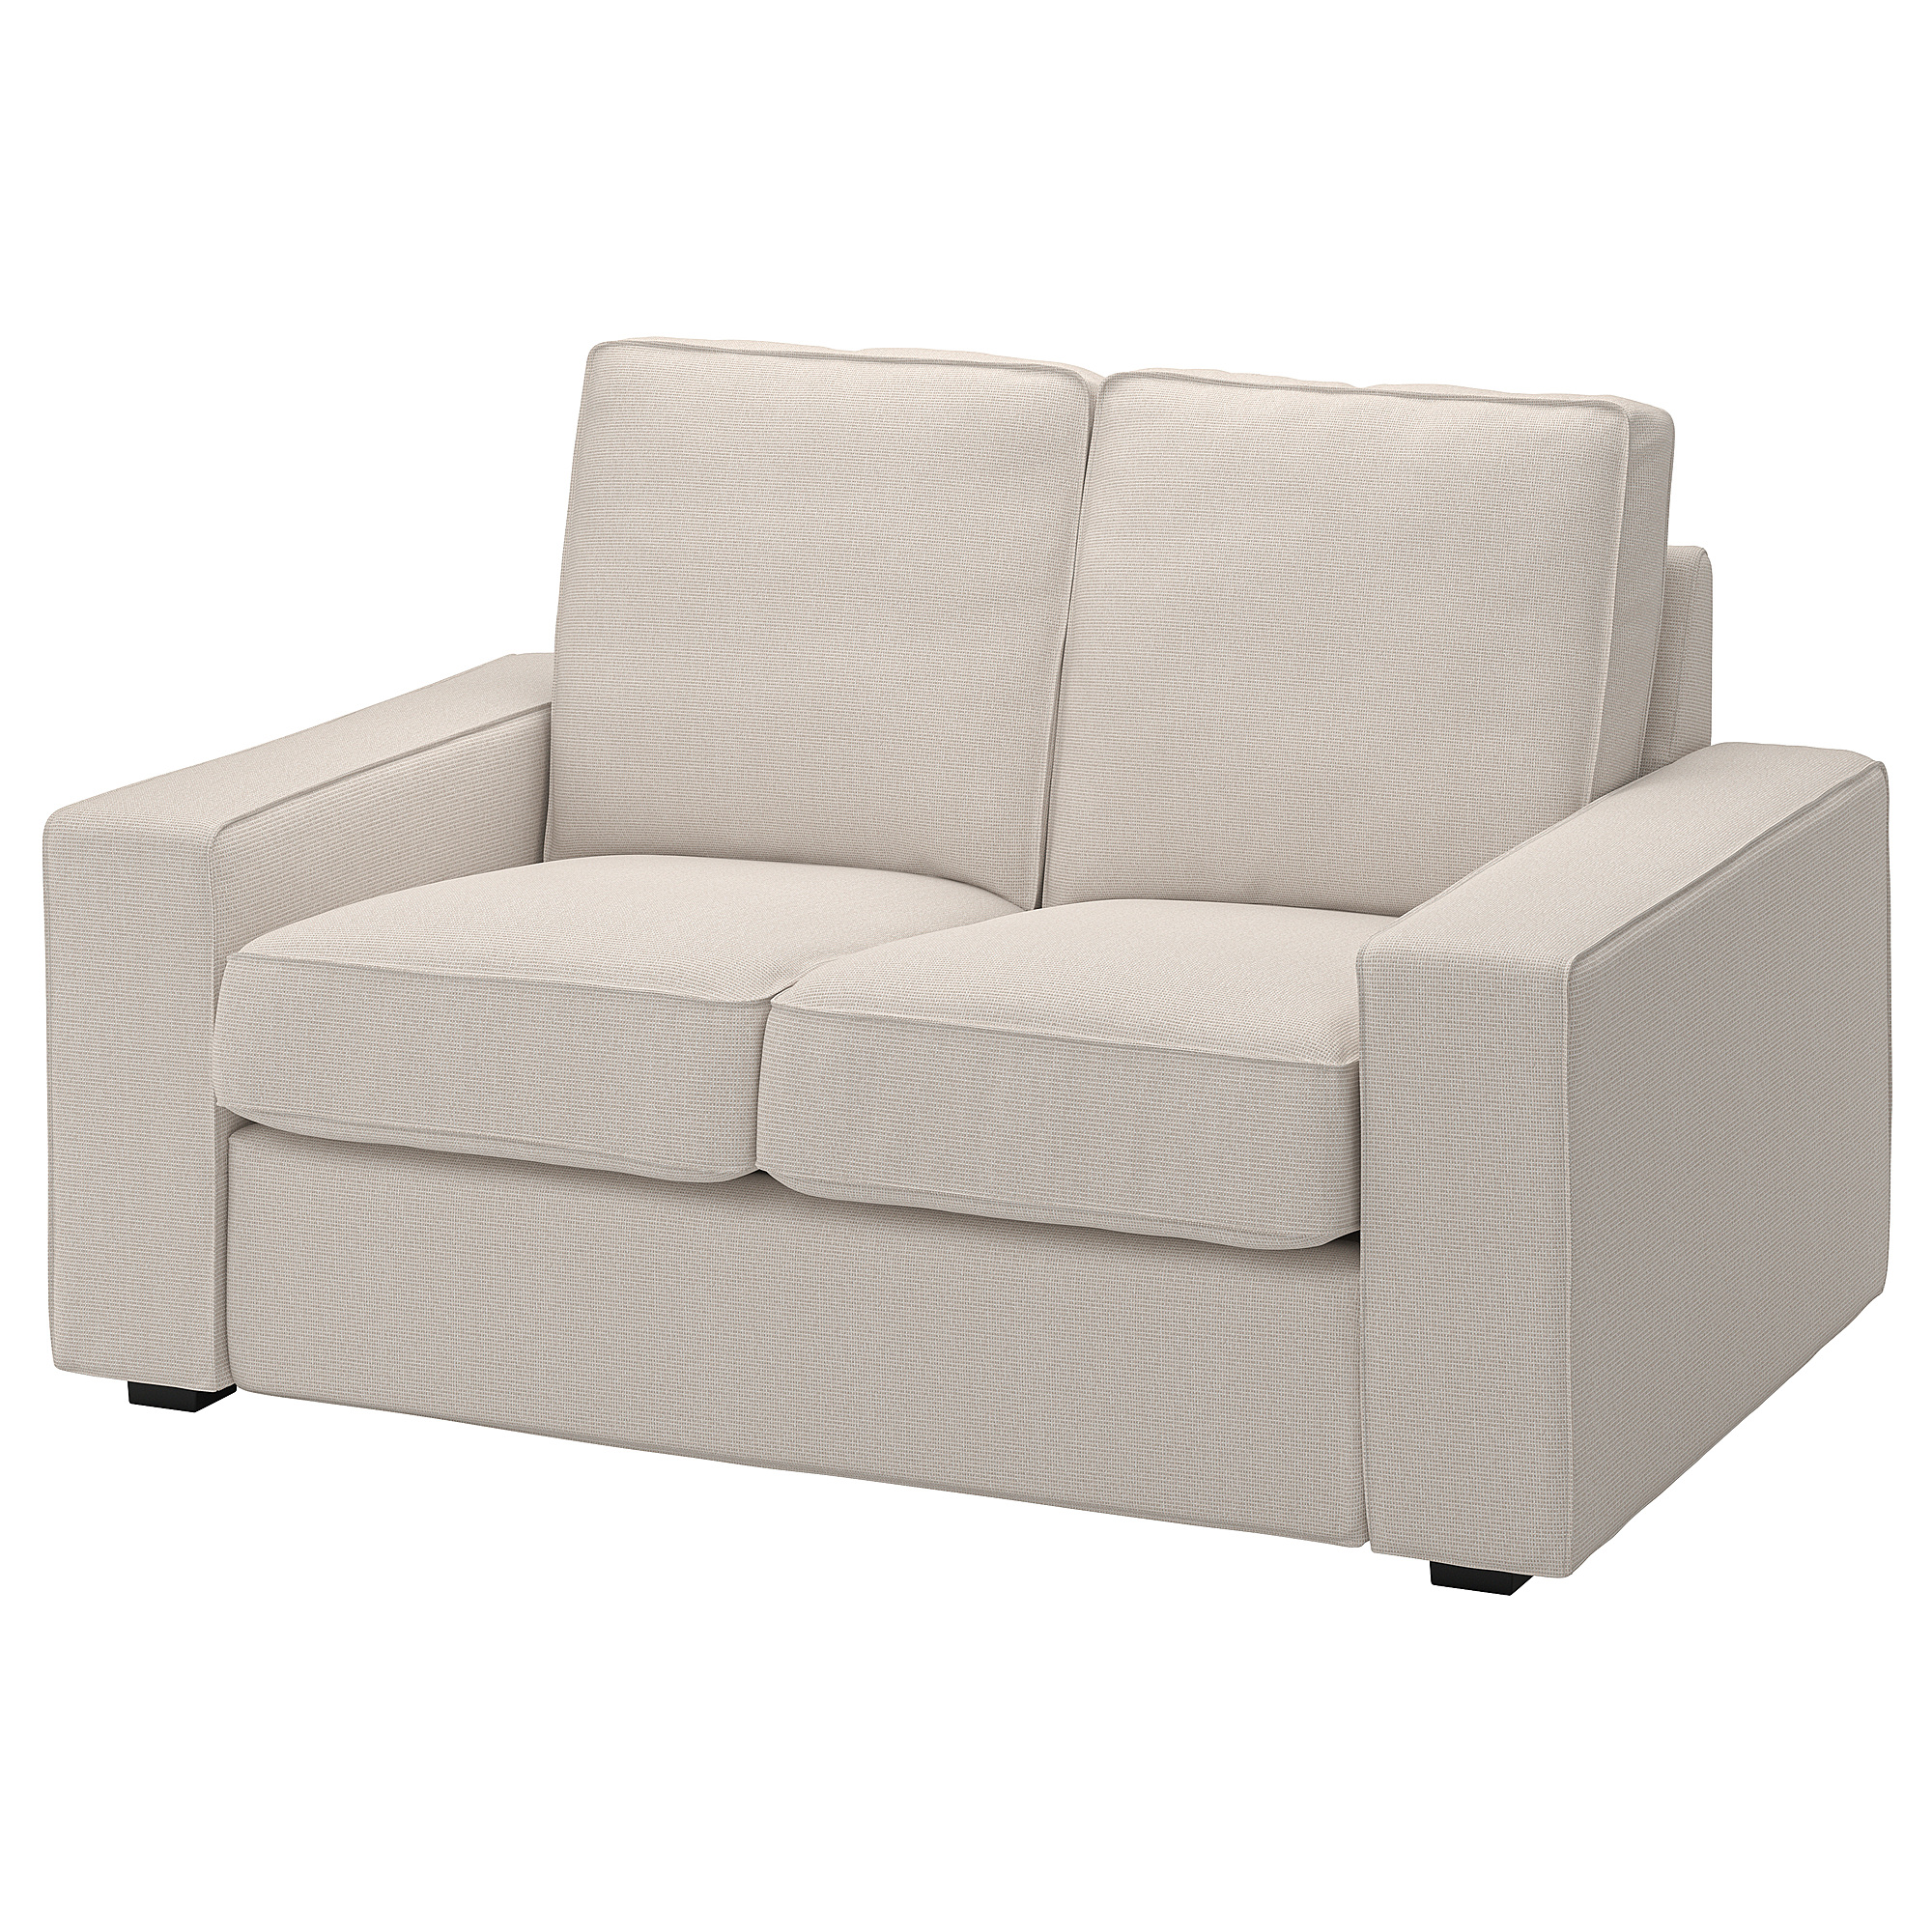 KIVIK cover for compact 2-seat sofa